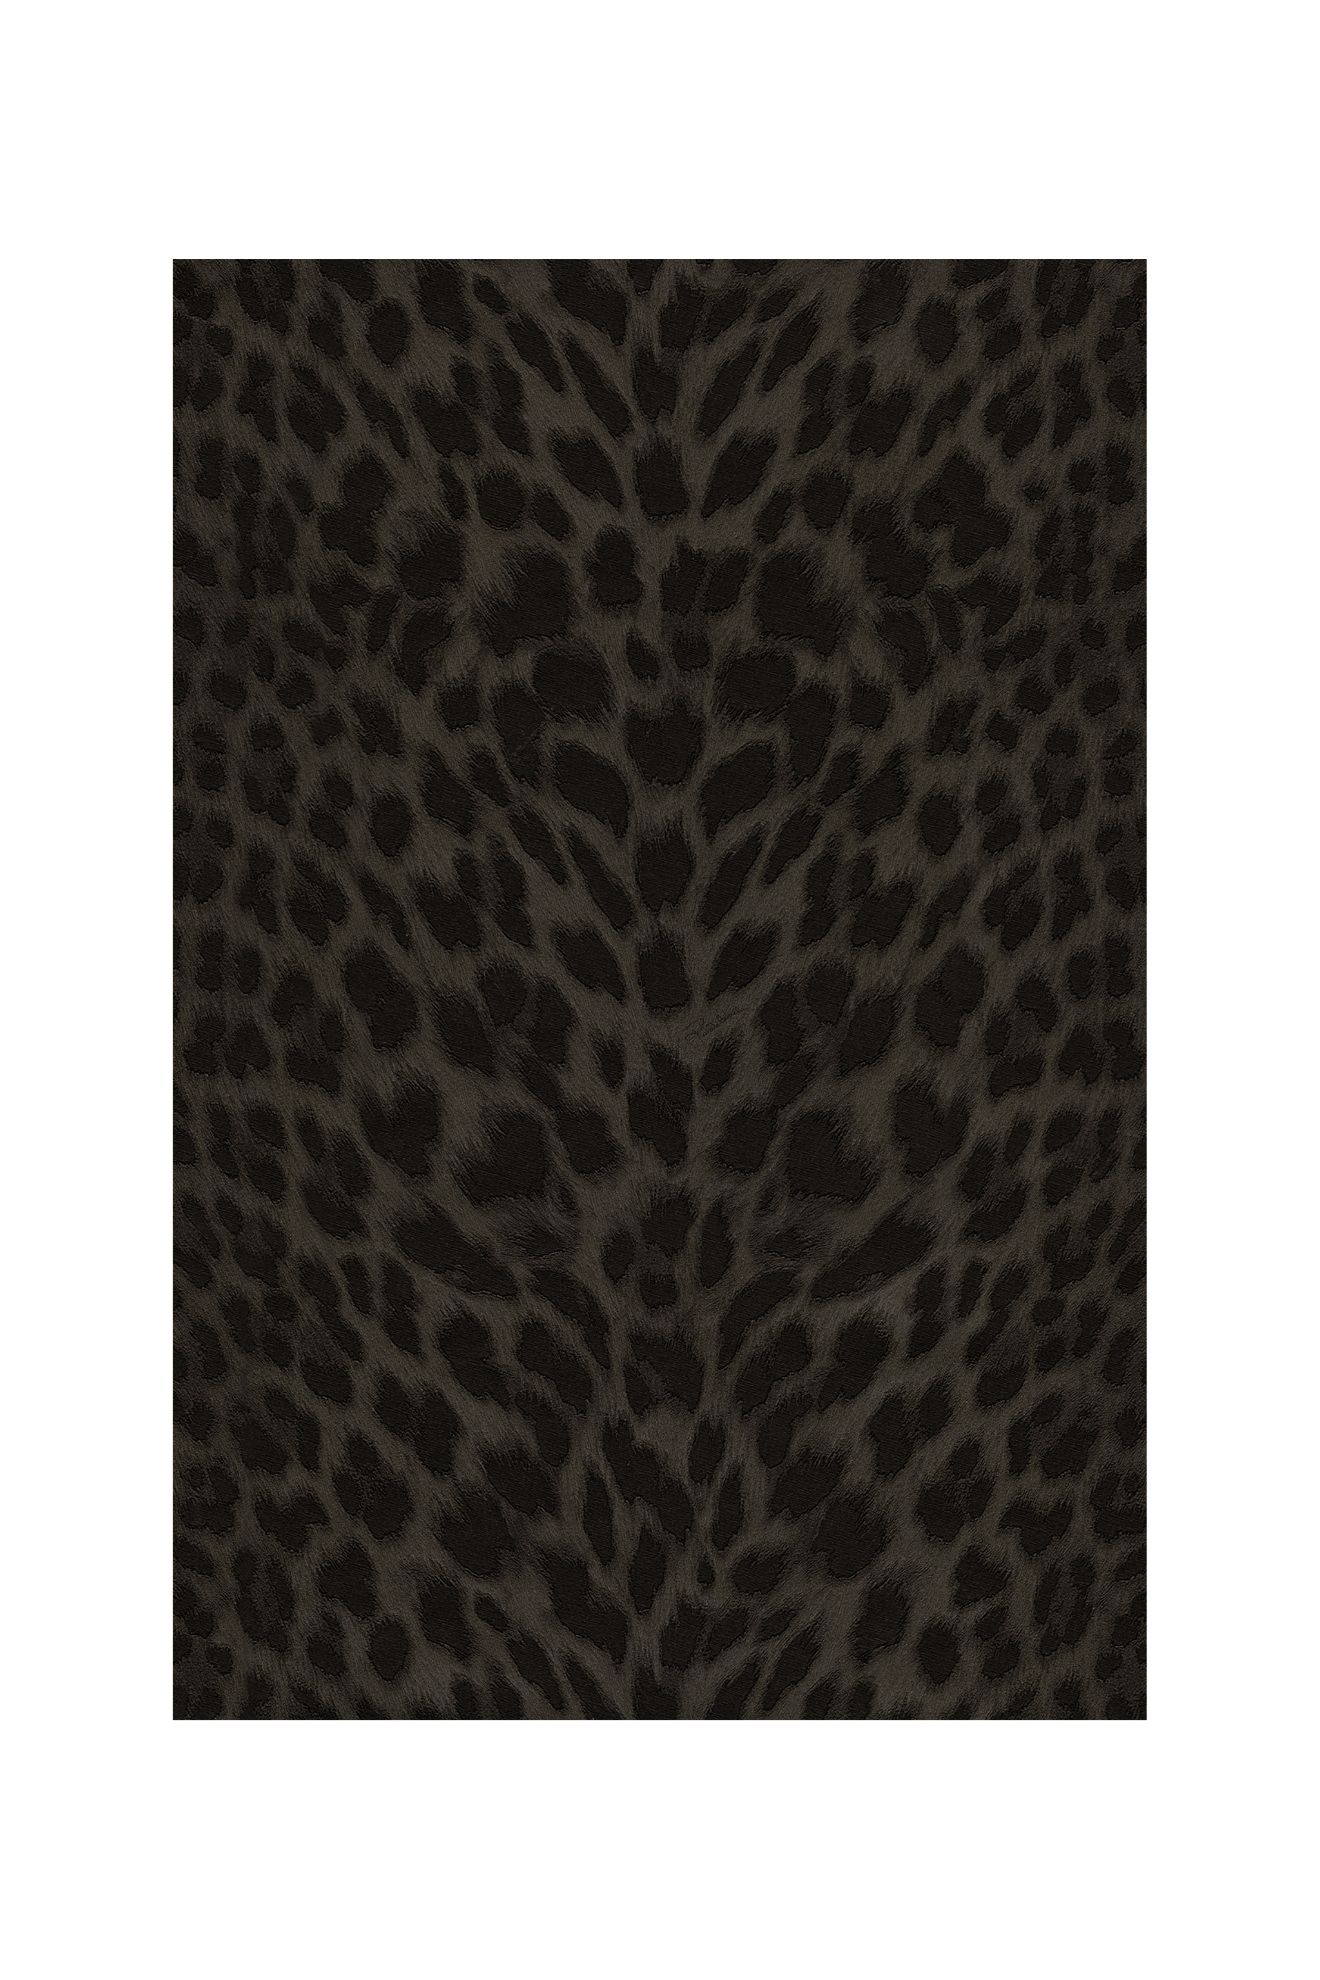 Black Leopard Animal Print Wallpaper R8324